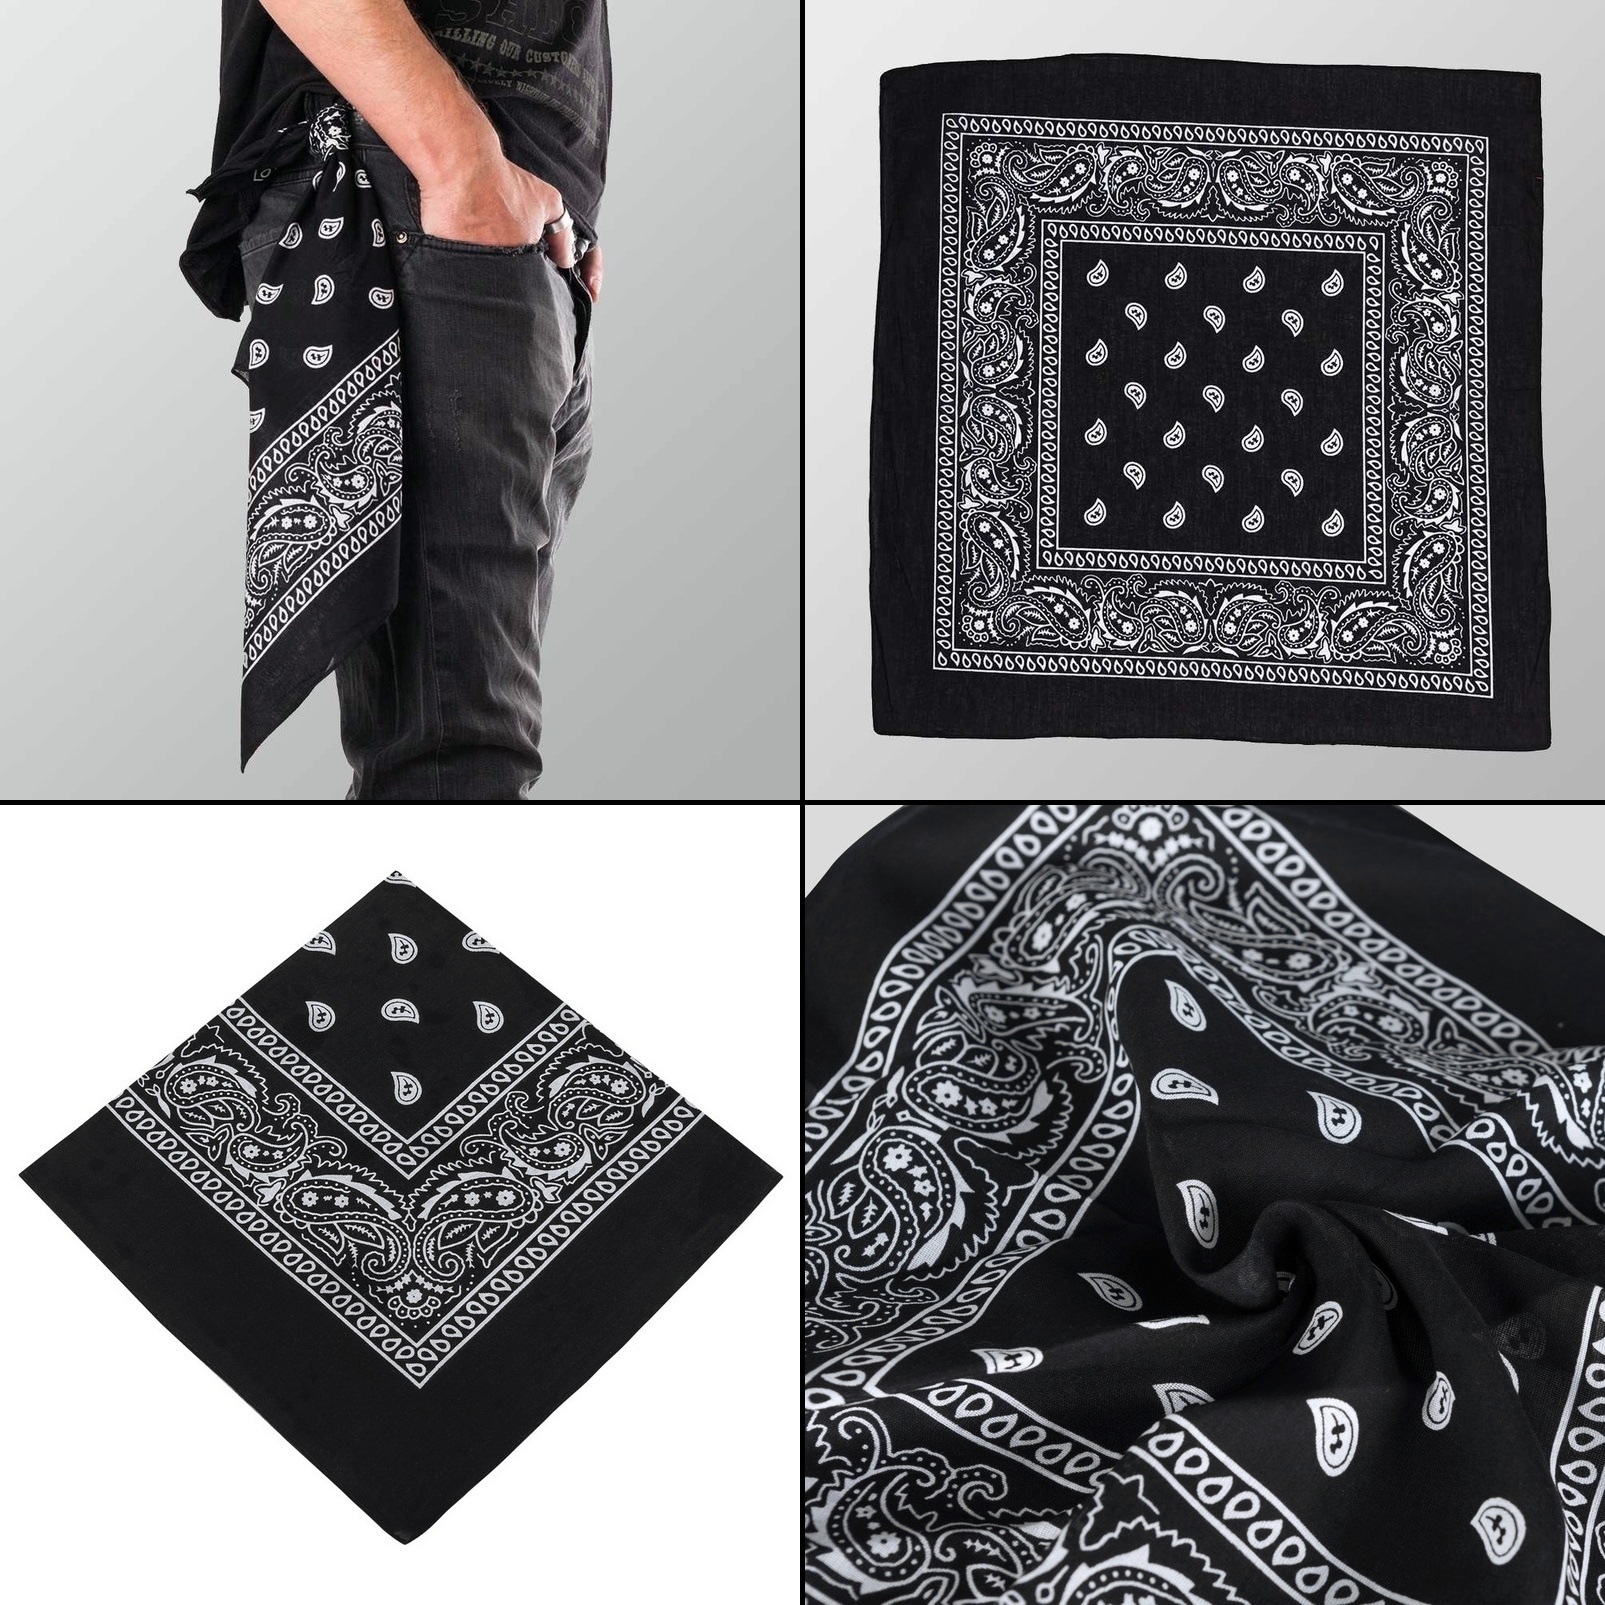 Šátek s paisley vzorem černý